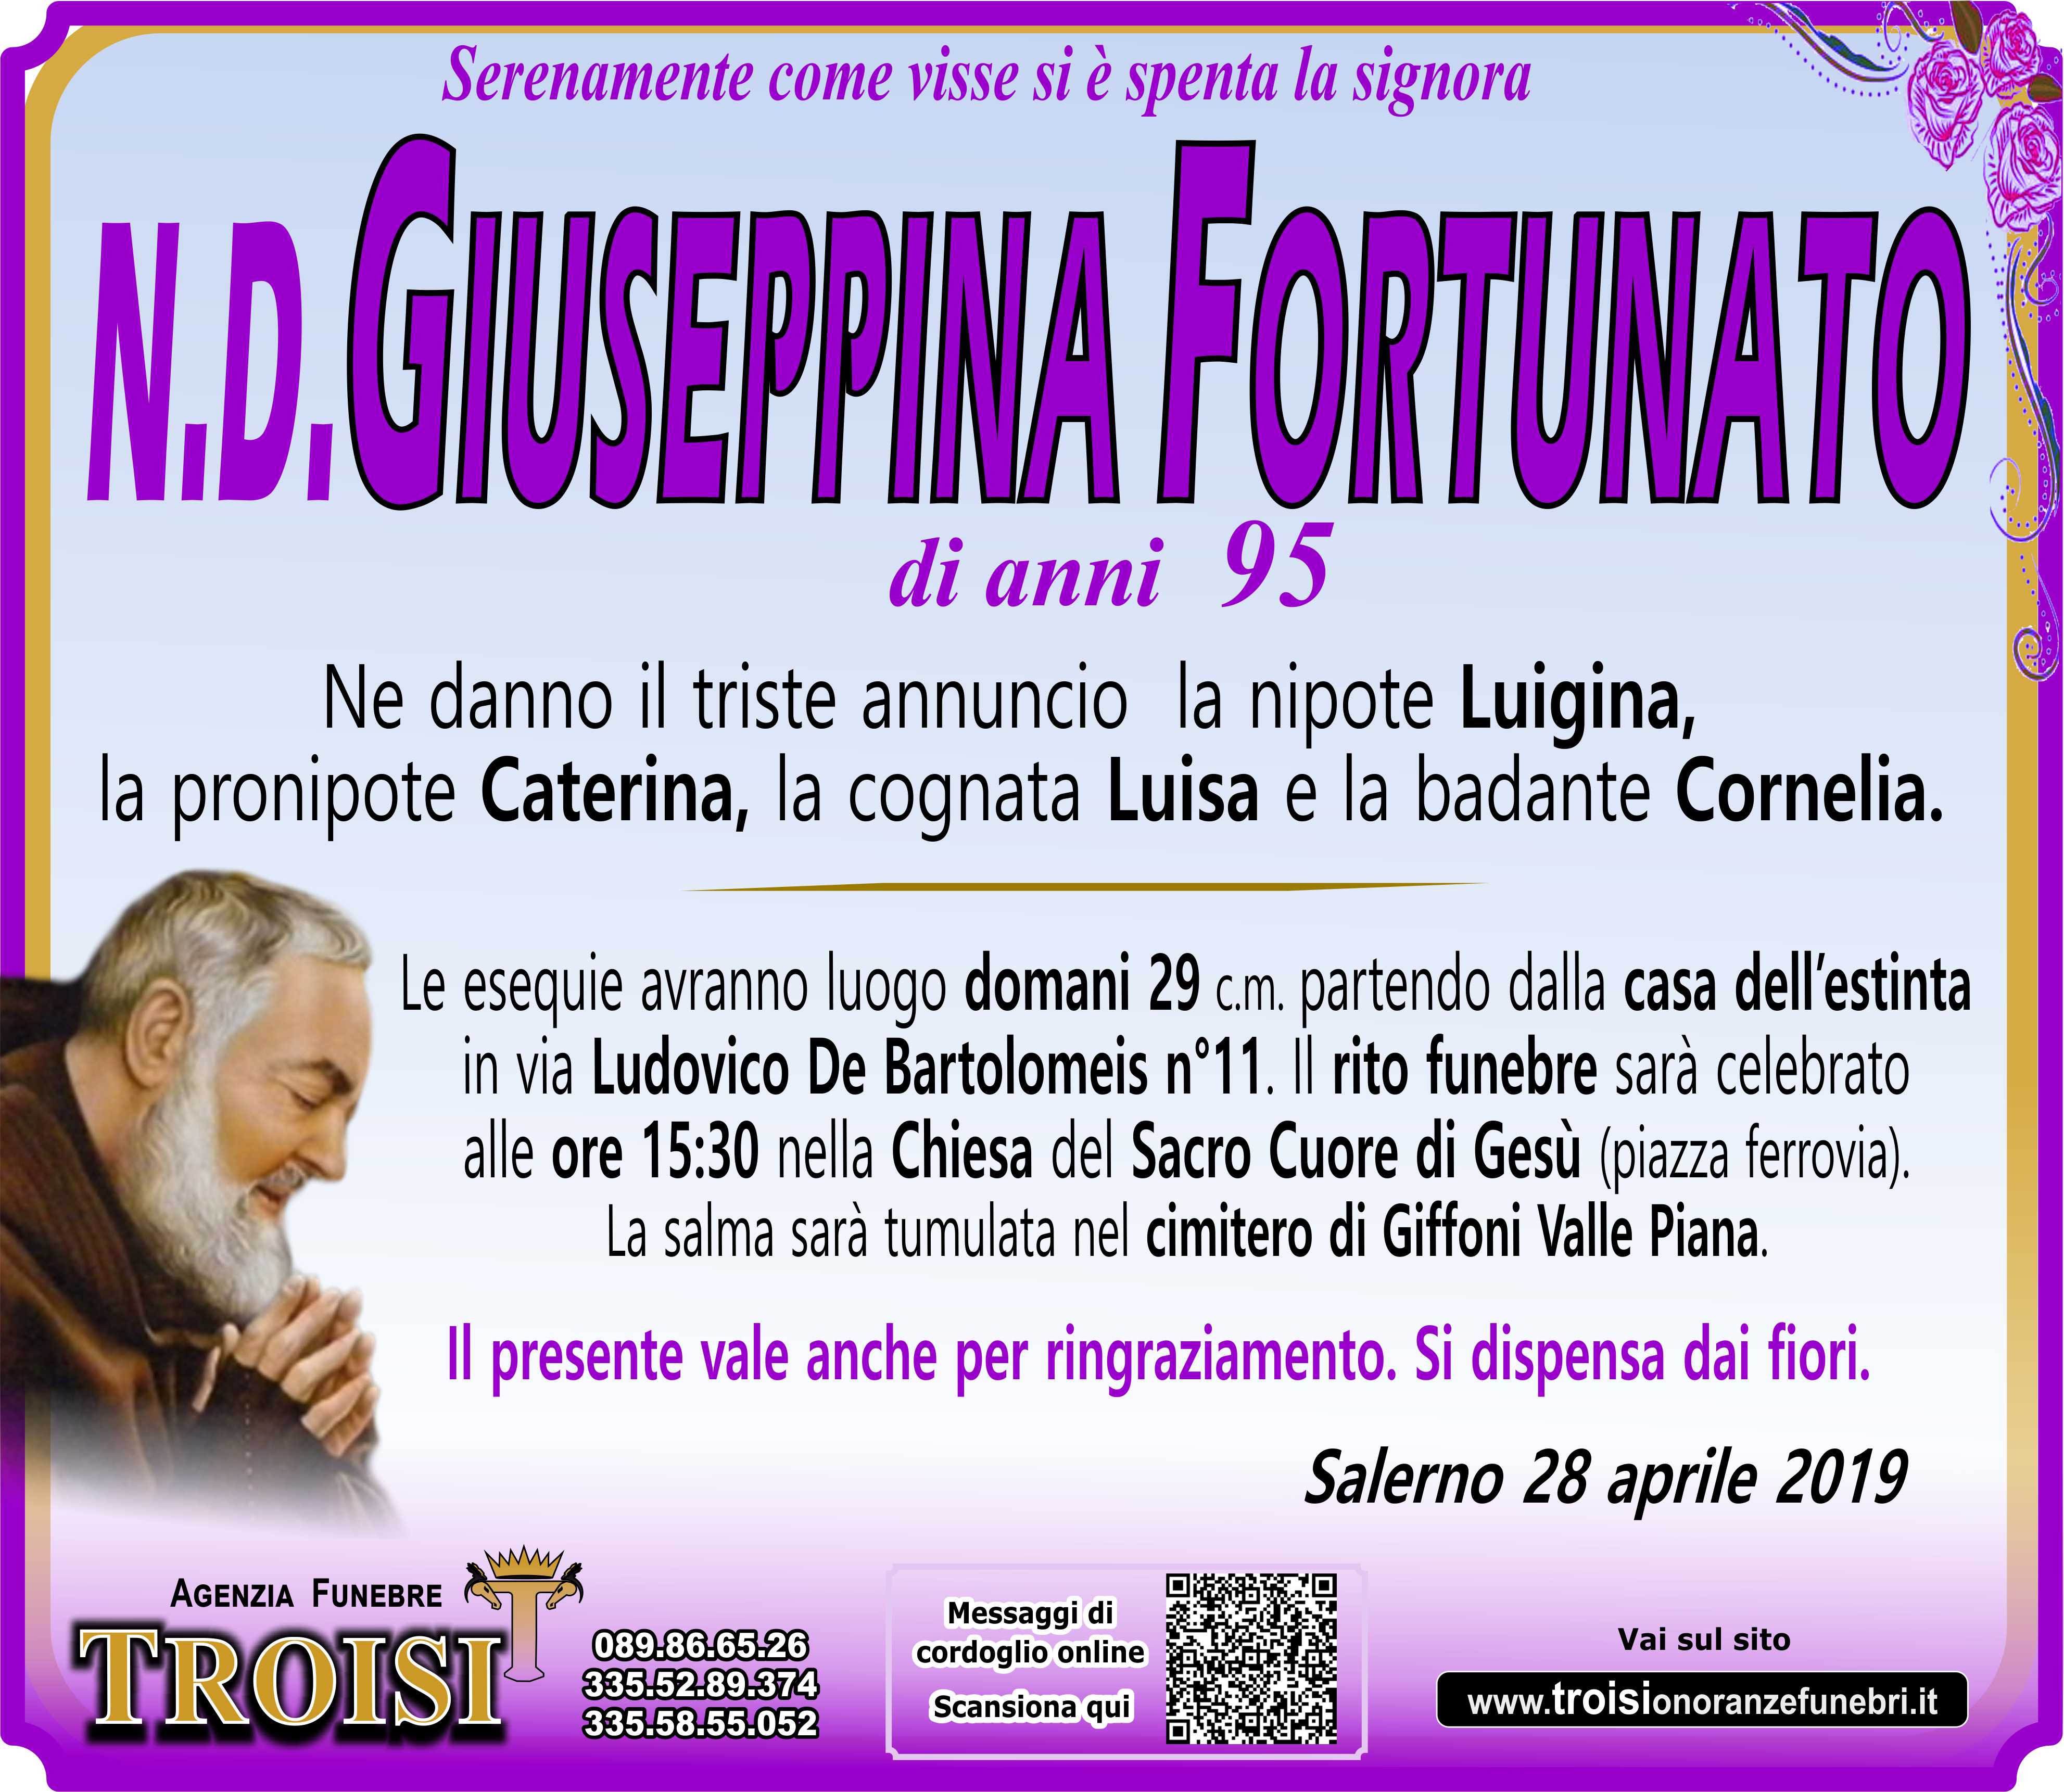 Giuseppina Fortunato